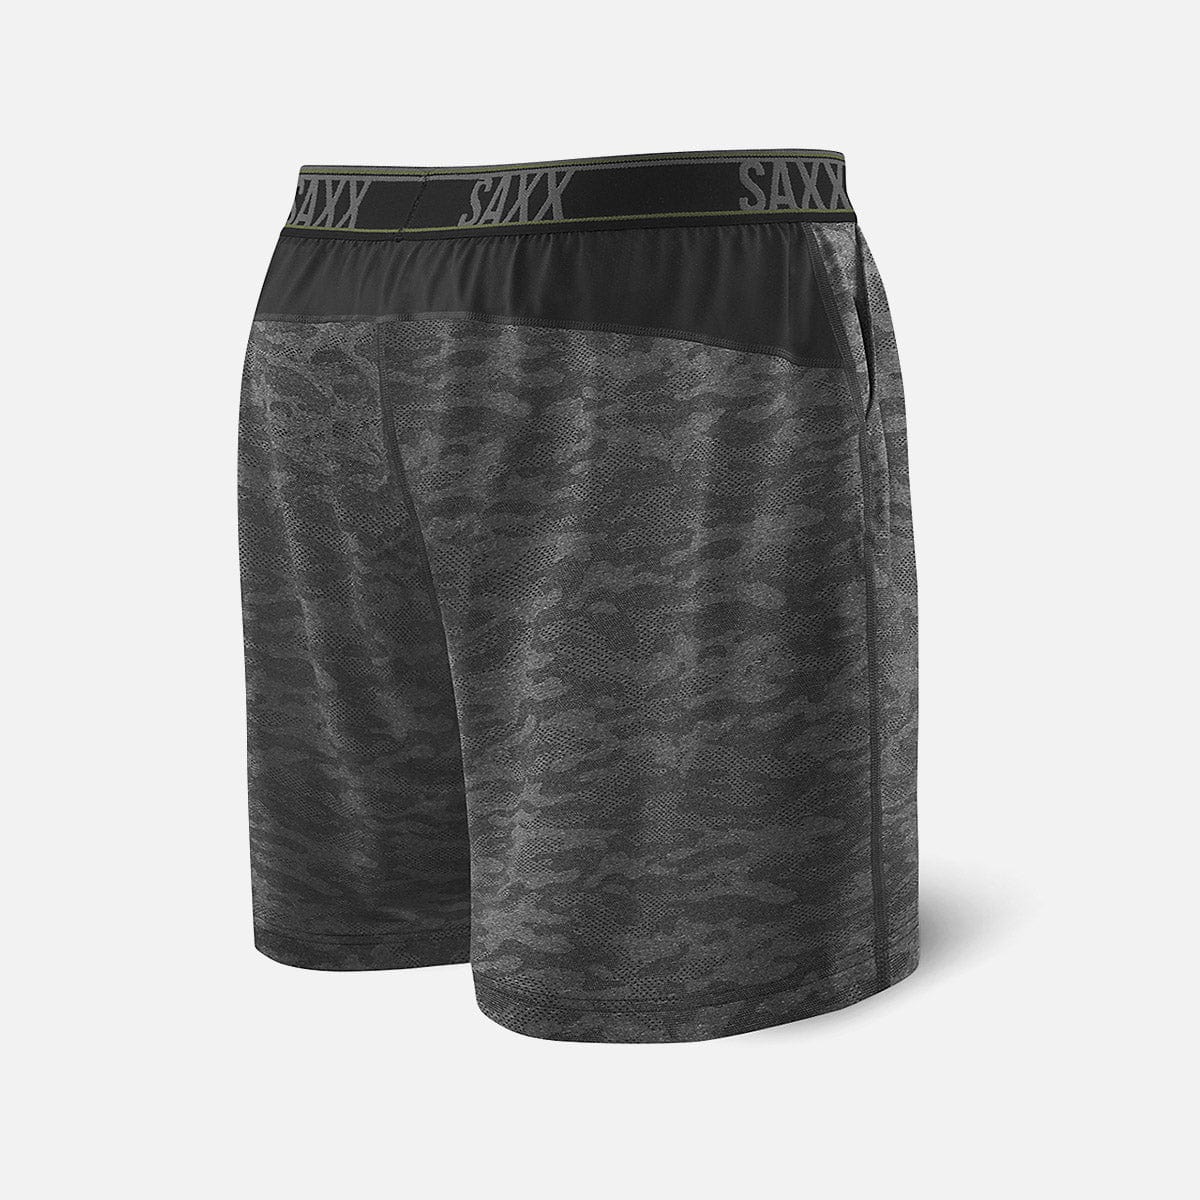 Saxx Legend 2N1 Shorts